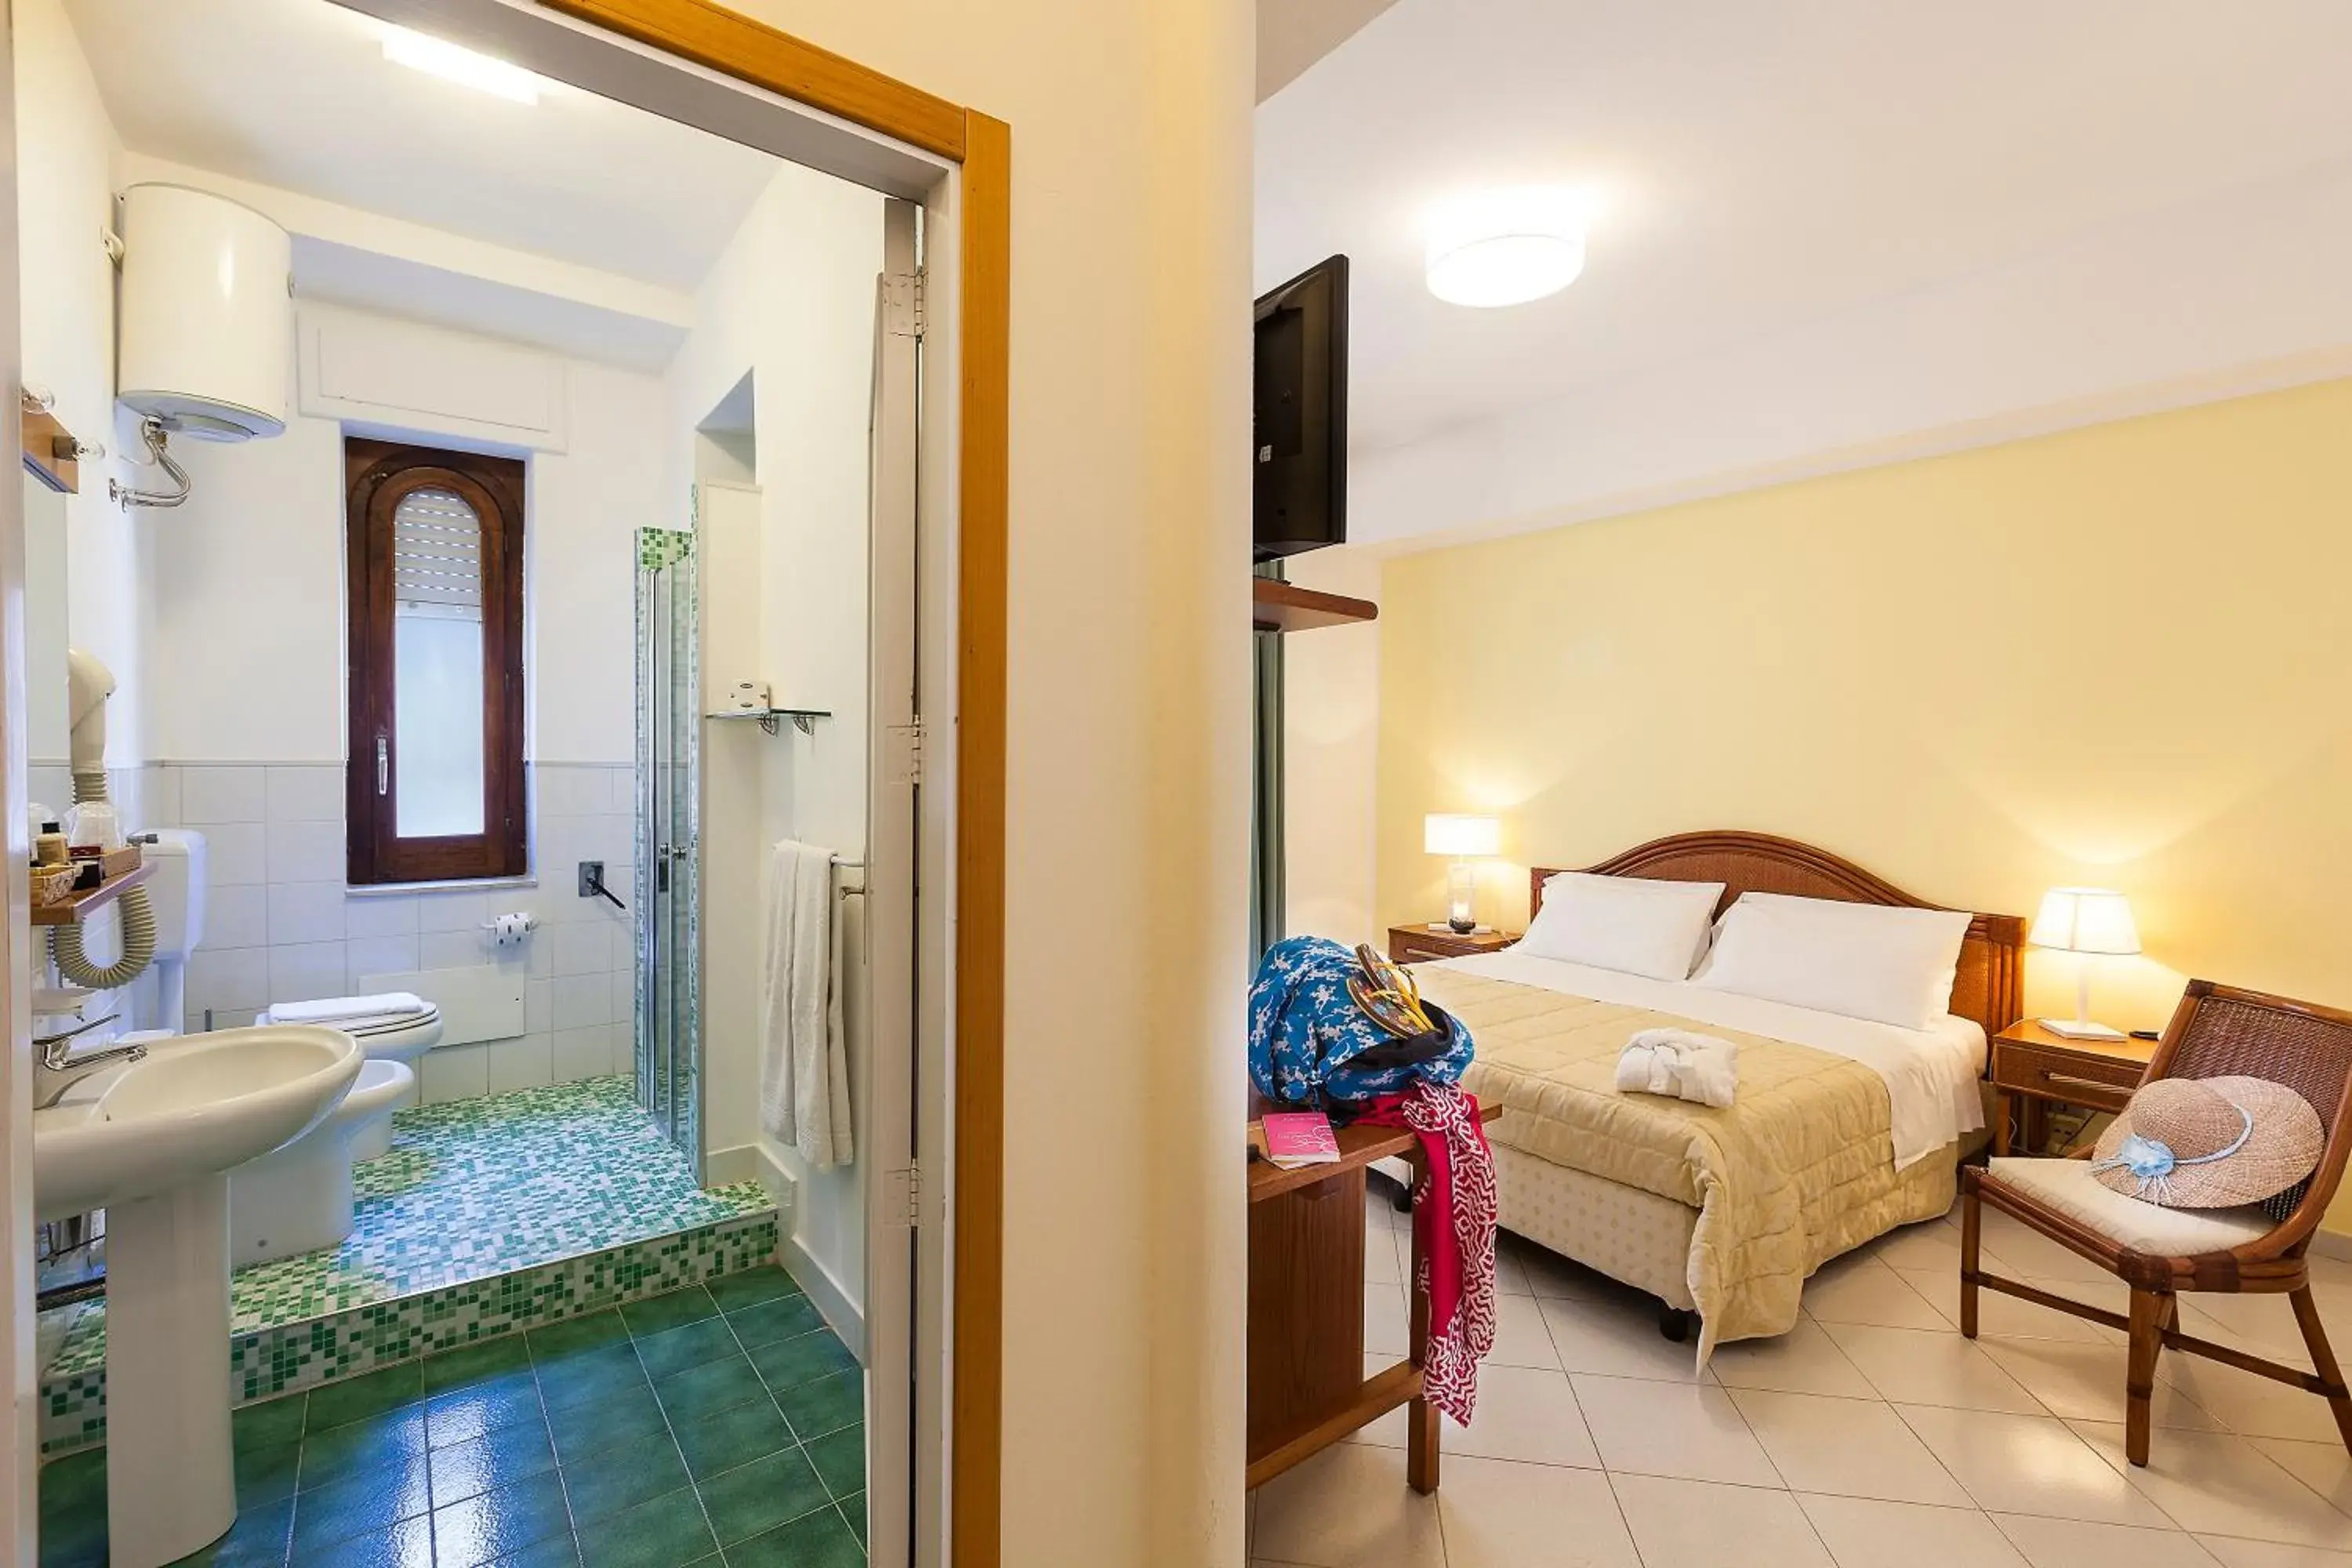 Photo of the whole room, Bathroom in Hotel Orsa Maggiore